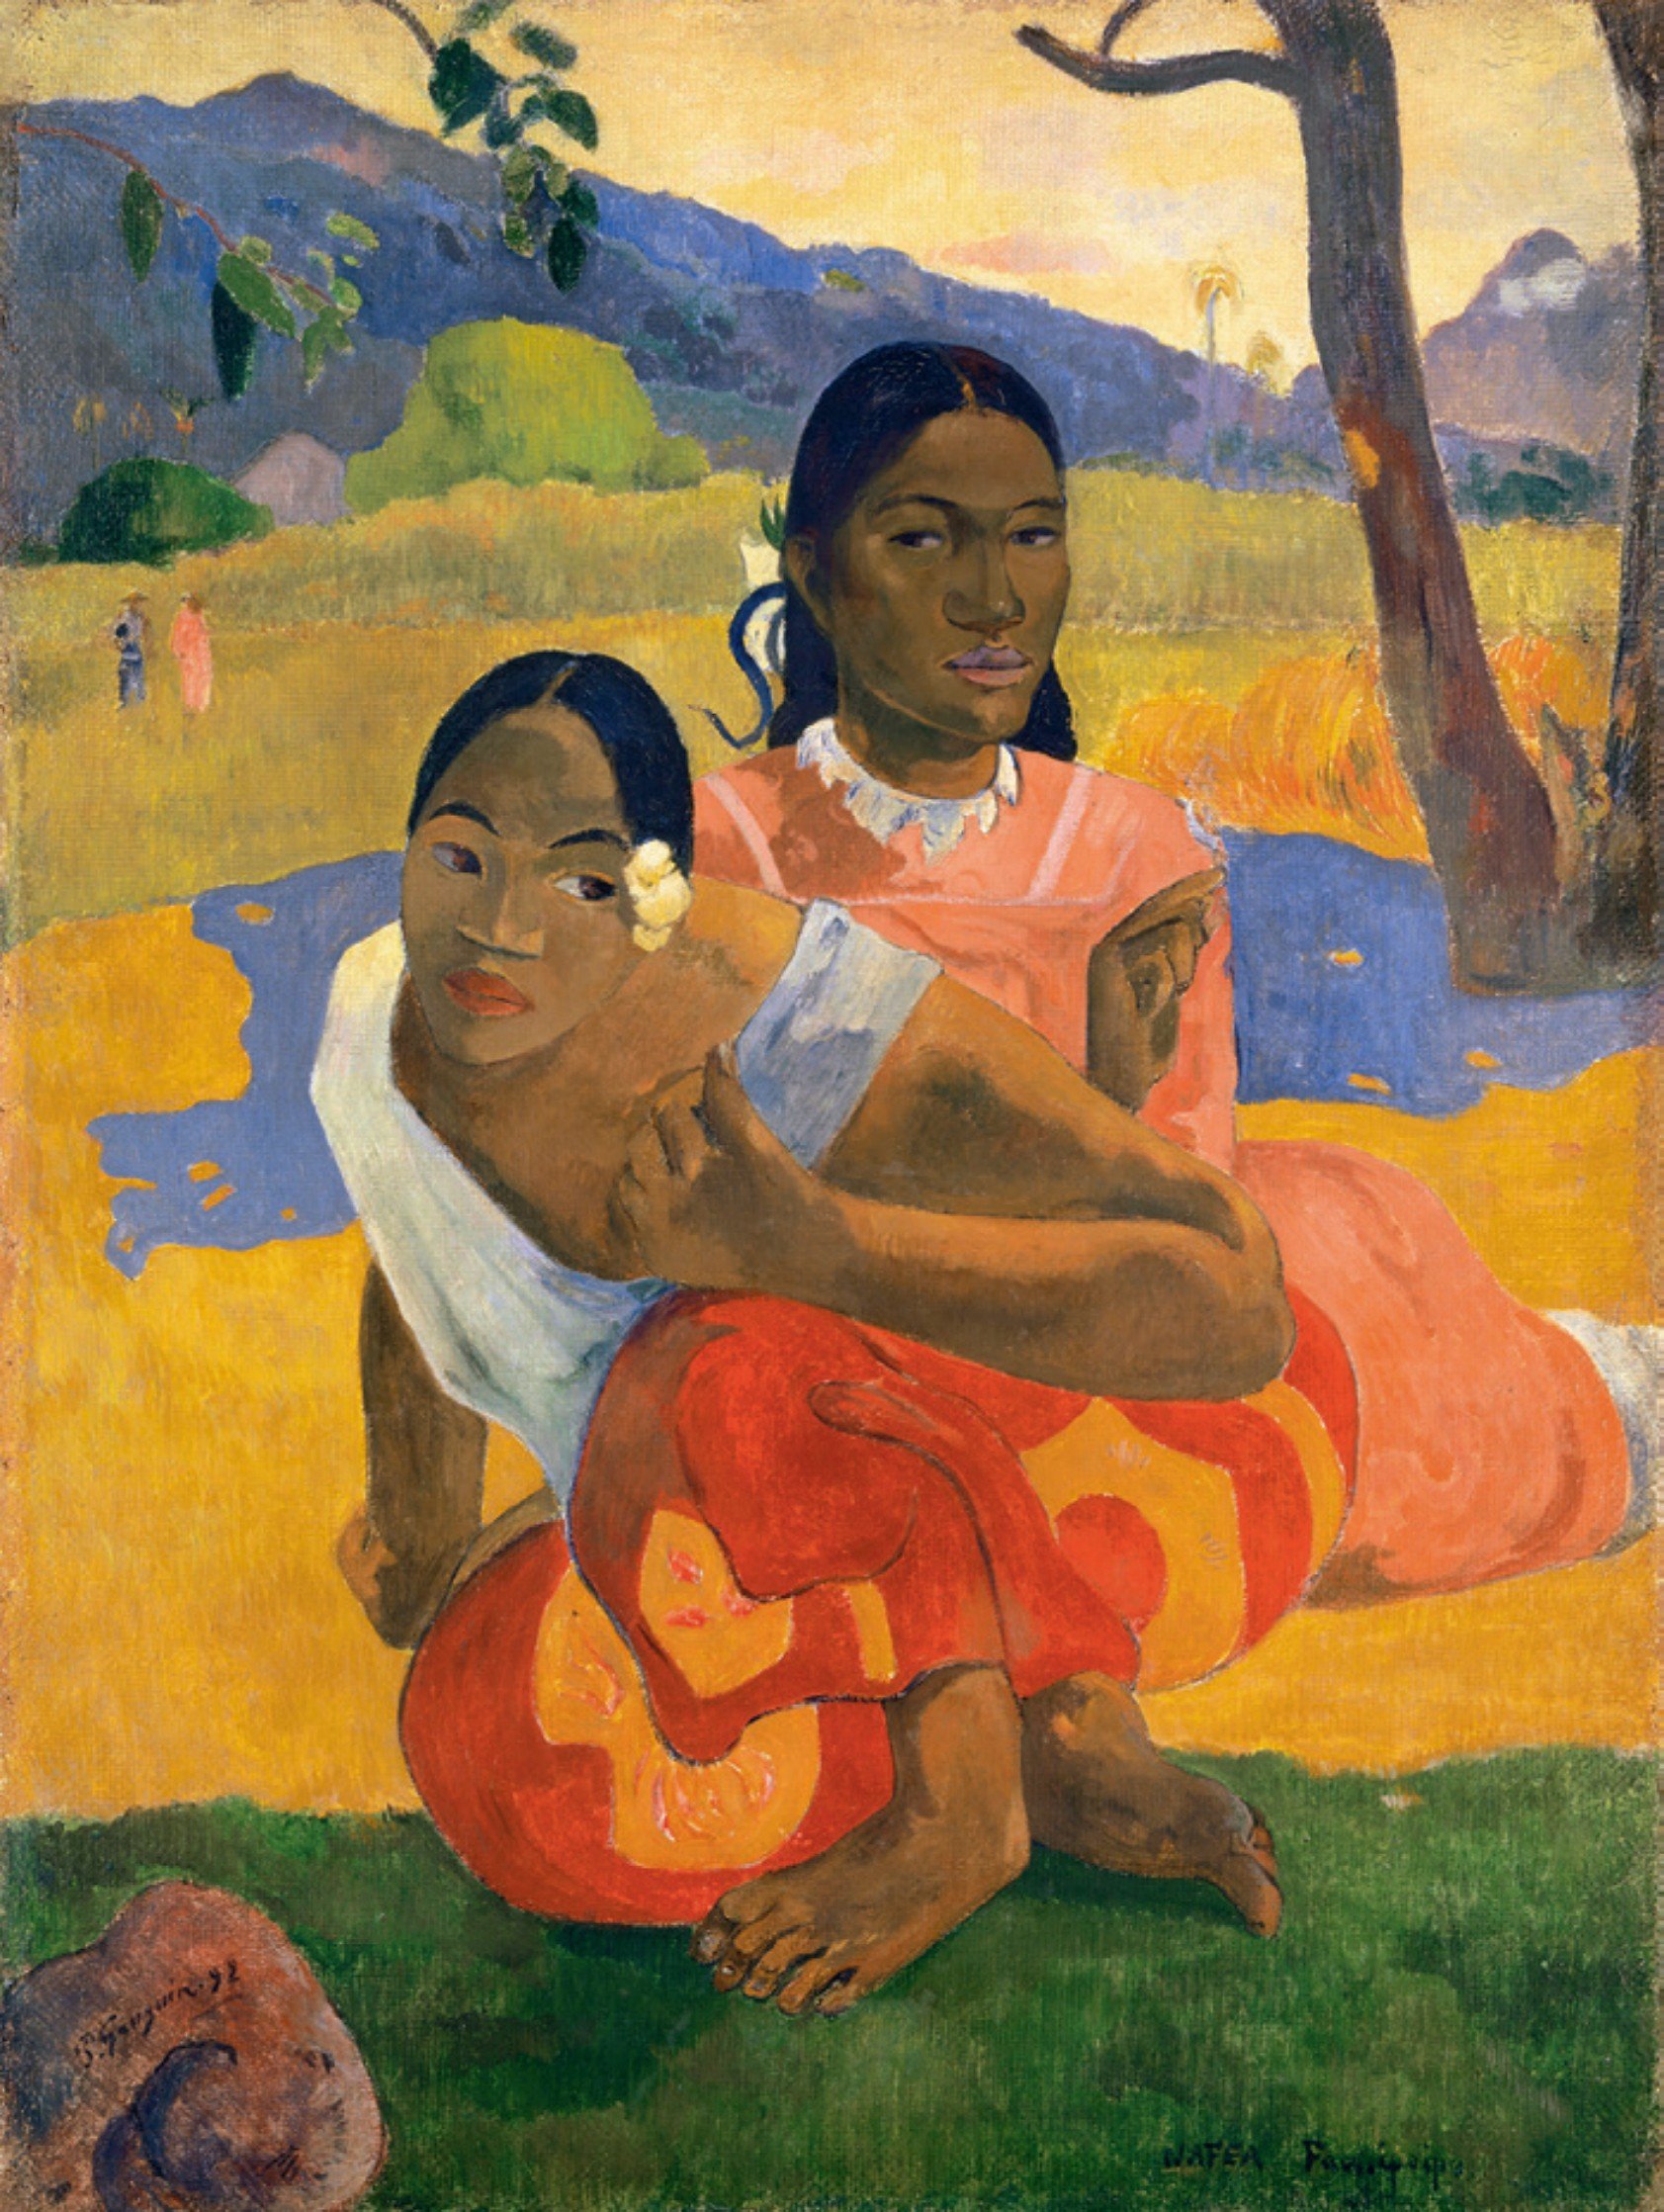 Nafea faa ipoipo de Paul Gauguin